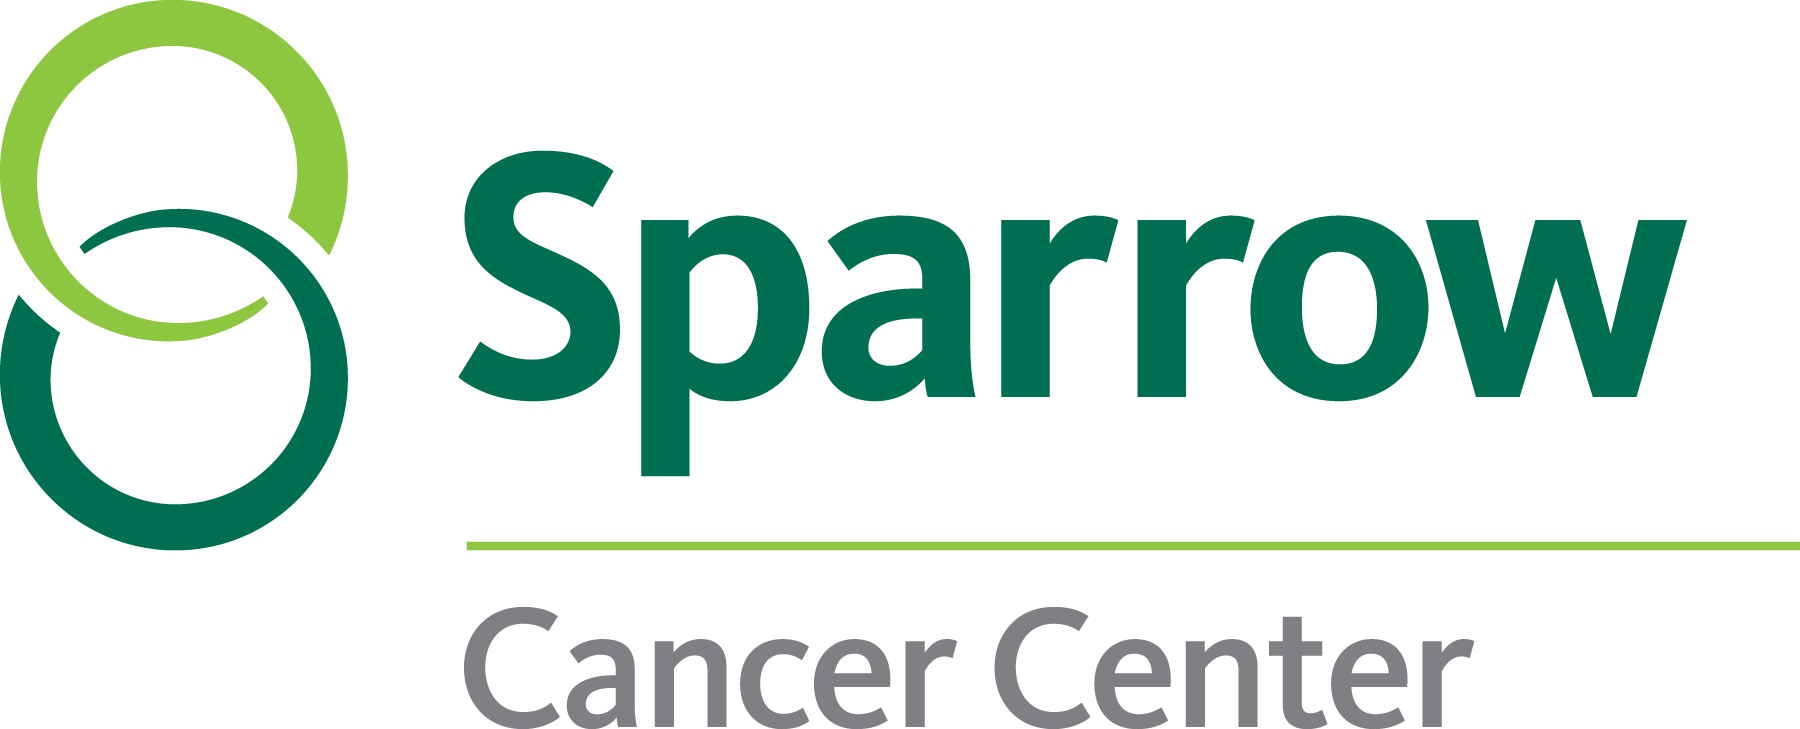 Michelle Reynaert, Sparrow Cancer Center - Sparrow Michigan Athletic Club (1800x729)